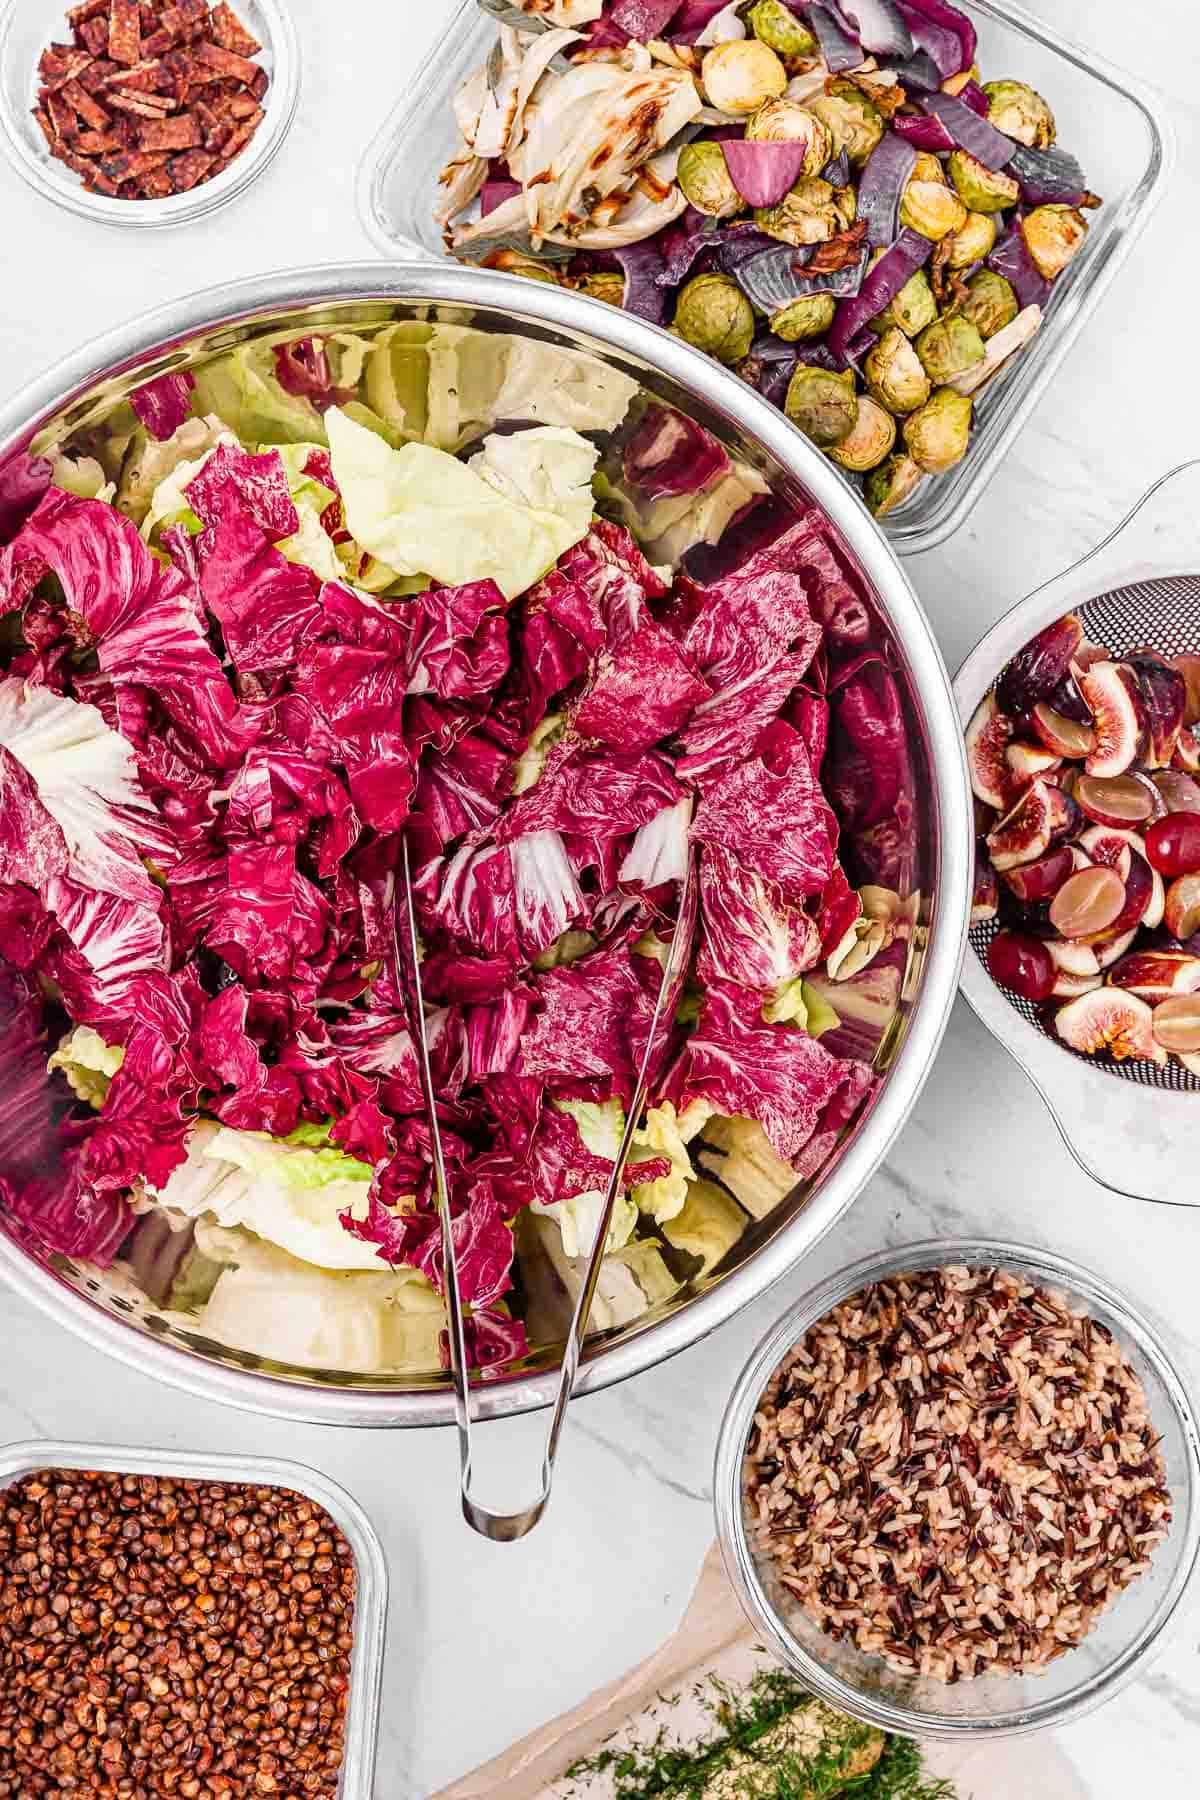 Vegan radicchio harvest salad ingredients, including rice, figs, grapes, lentils, vegan bacon, brussels sprouts.